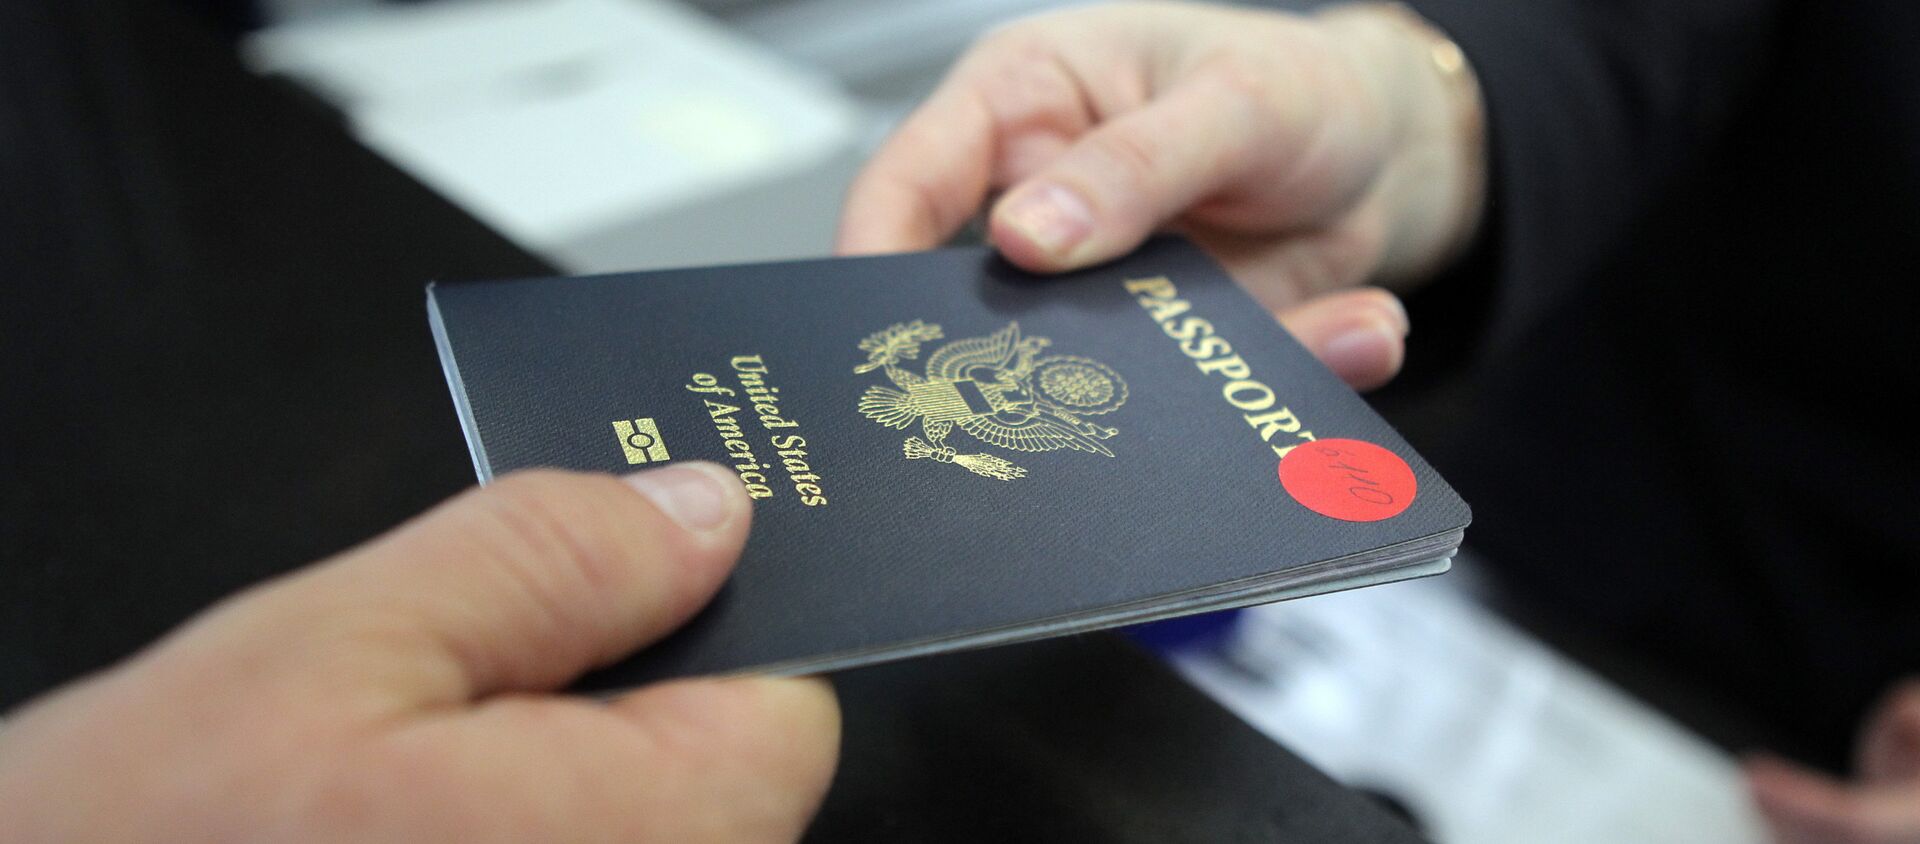 Пассажир предъявляет паспорт гражданина США - Sputnik Армения, 1920, 26.04.2021